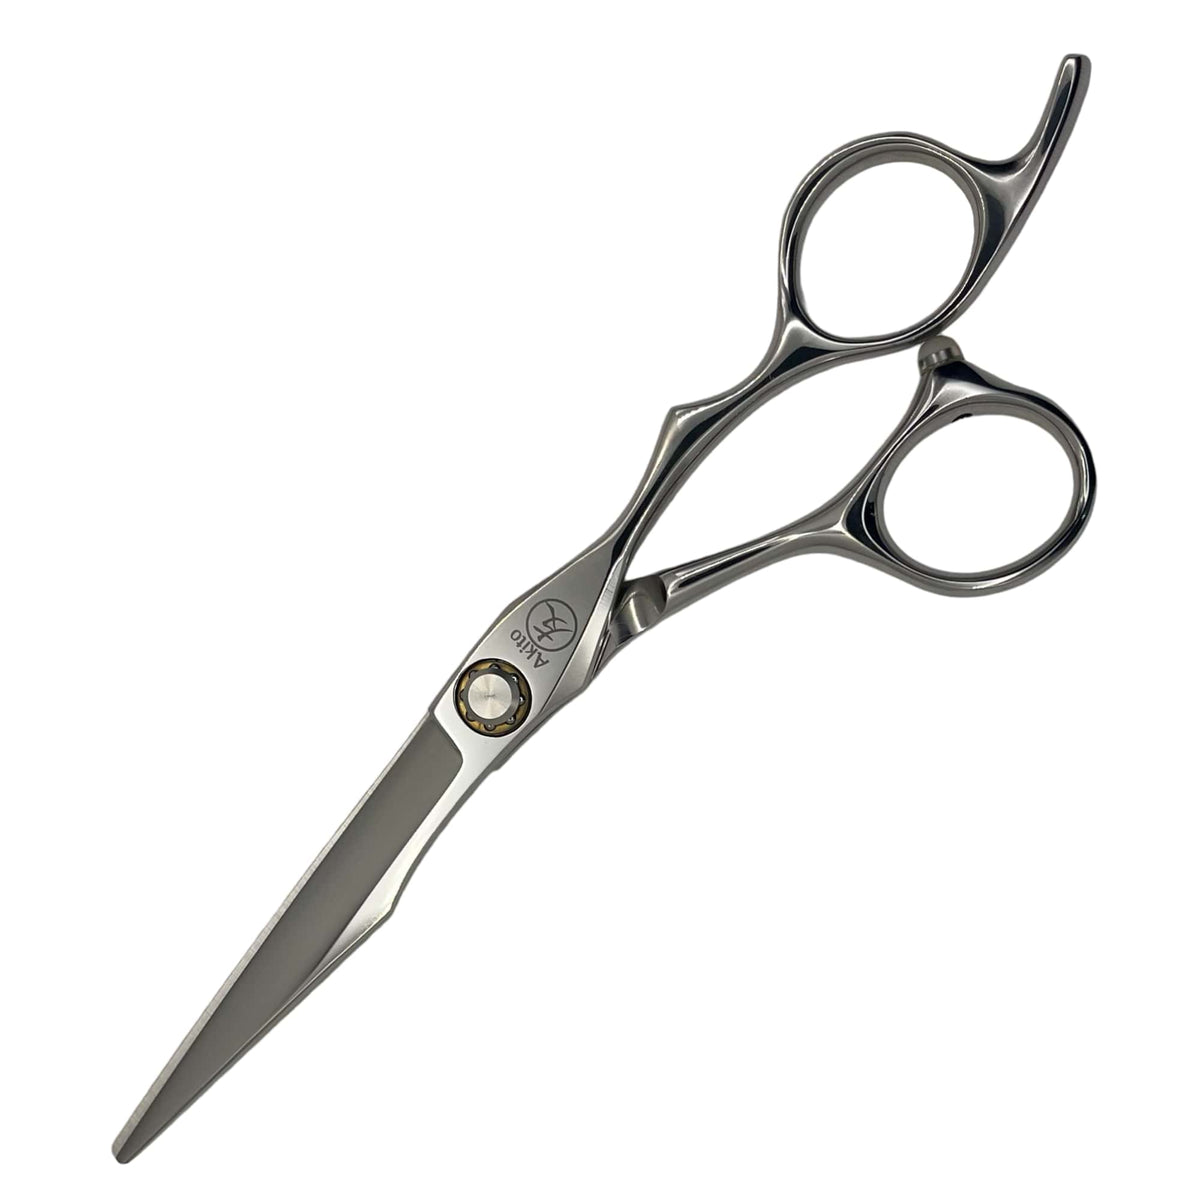 Katana Hair Scissors in 6.0 inch side angle